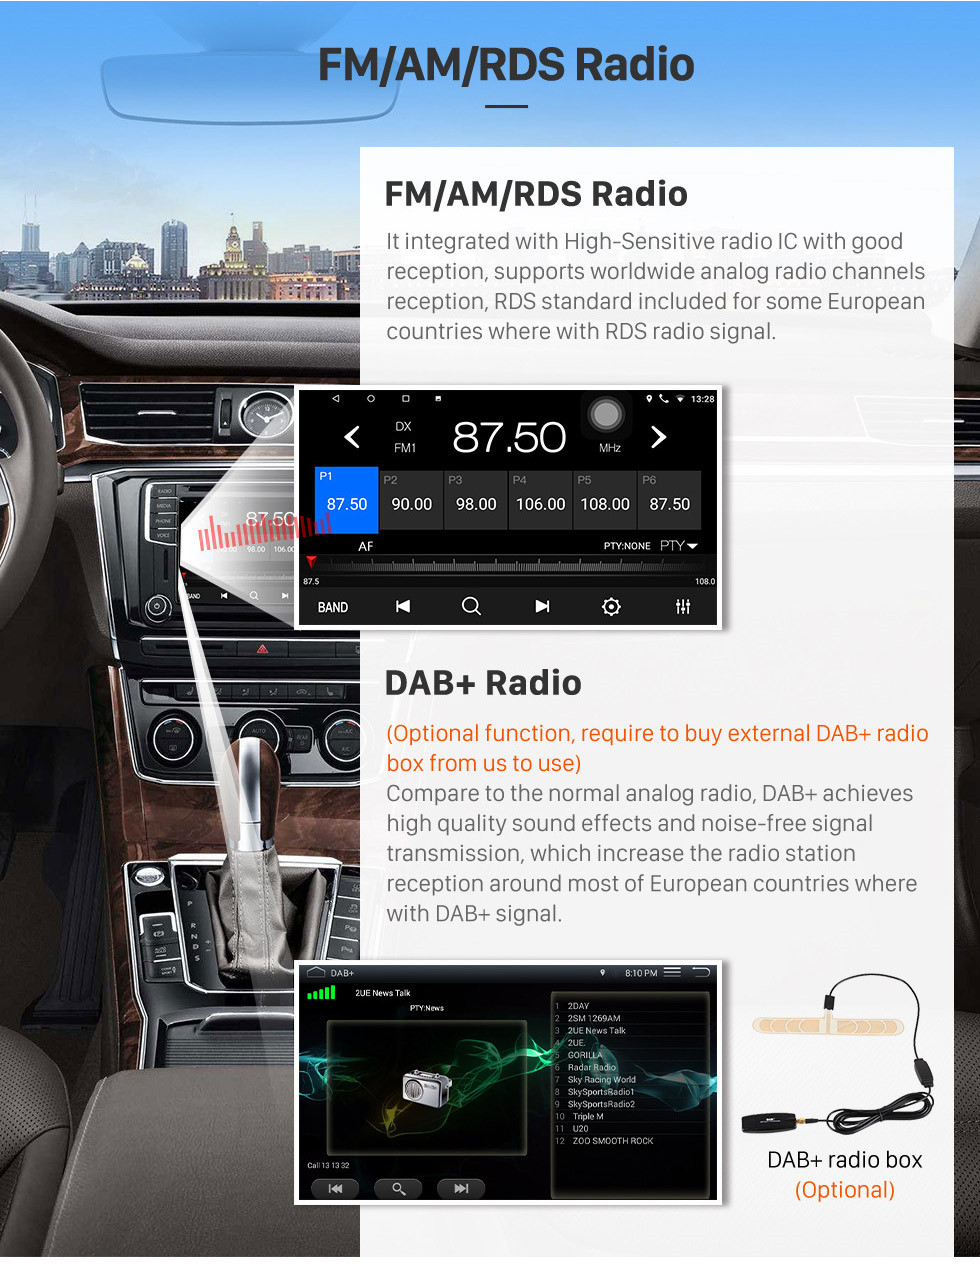 Seicane Android 10.0 9 inch Touchscreen GPS Navigation Radio for 2012-2014 Kia Rio LHD Kia Rio EX with Bluetooth USB WIFI AUX support Backup camera Carplay SWC TPMS